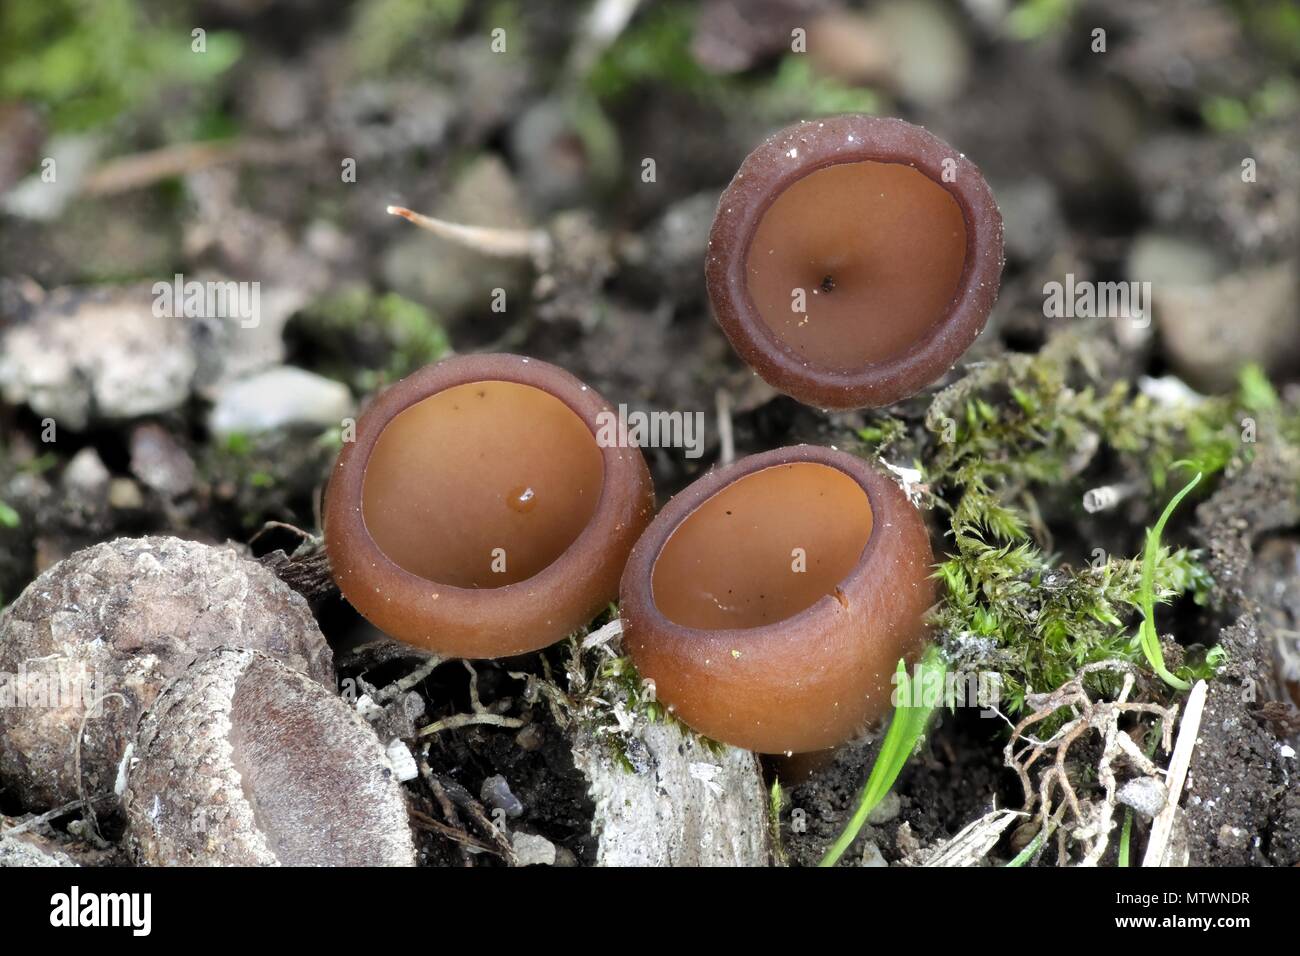 Anemone cup, Dumontinia tuberosa, wild mushroom from Finland Stock Photo